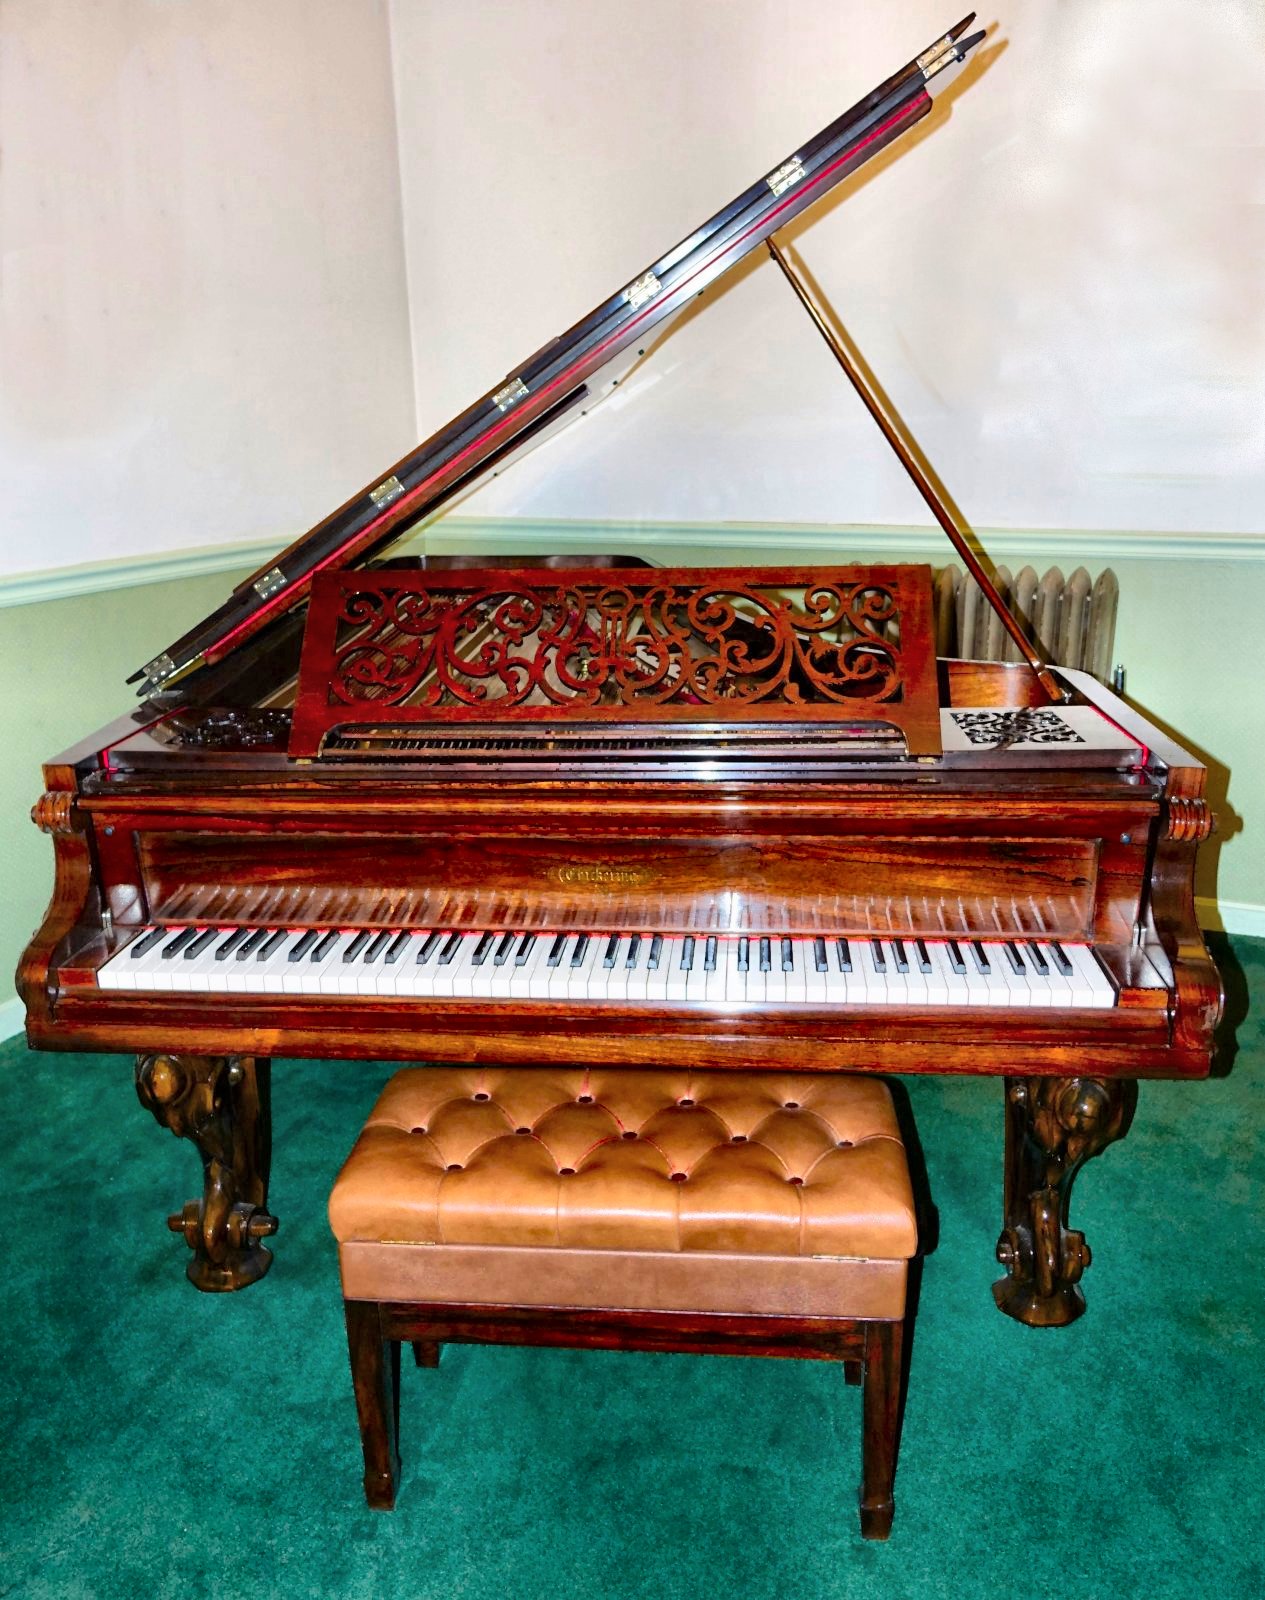 1973 chickering 301 ebony grand piano with bench worth